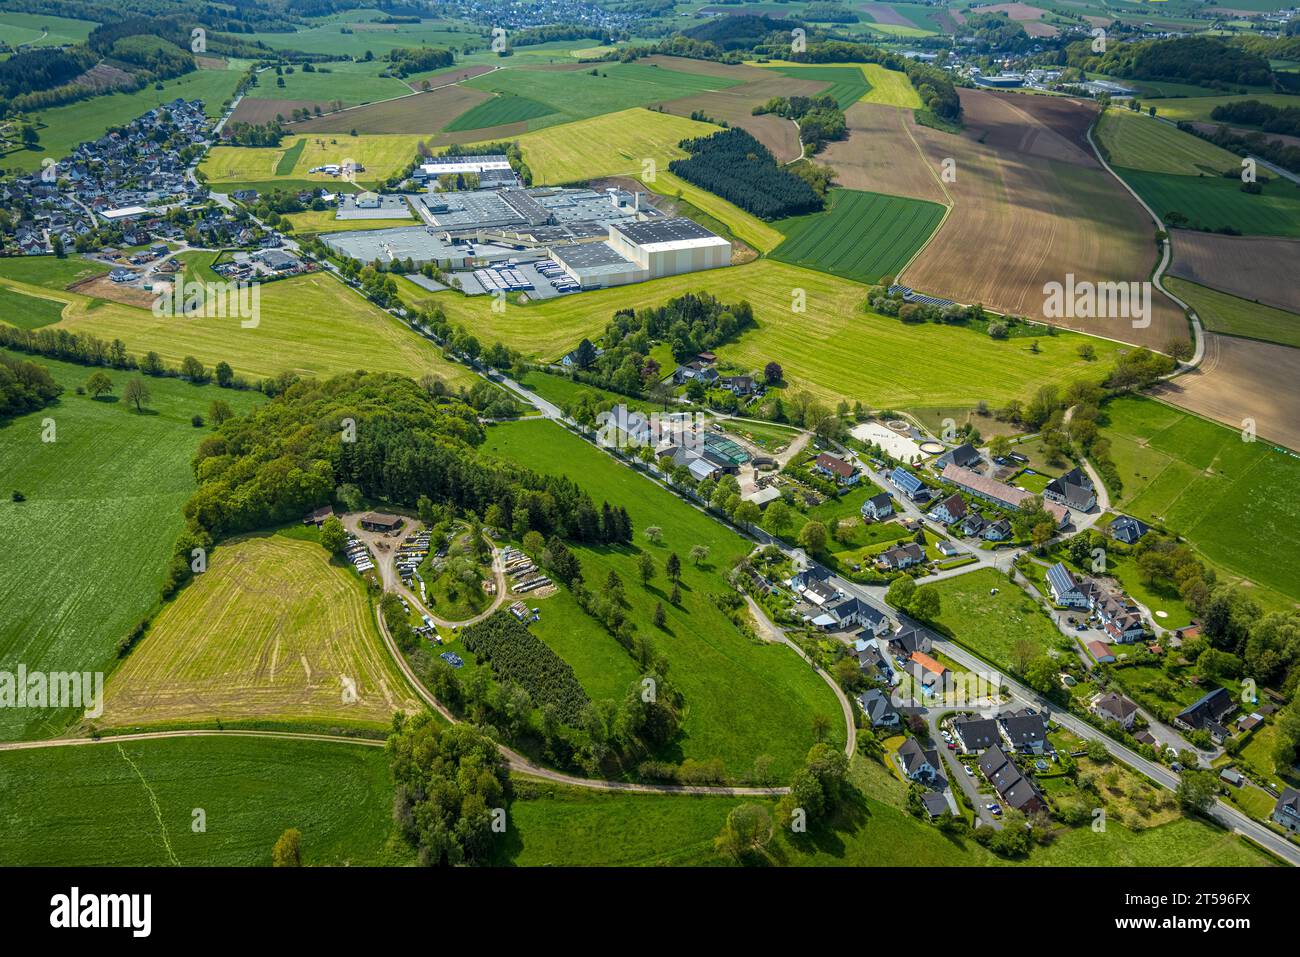 Aerial view, Tillmann paper and corrugated cardboard factory, timber yard in Seidfeld, Stockum, Sundern, Sauerland, North Rhine-Westphalia, Germany, D Stock Photo